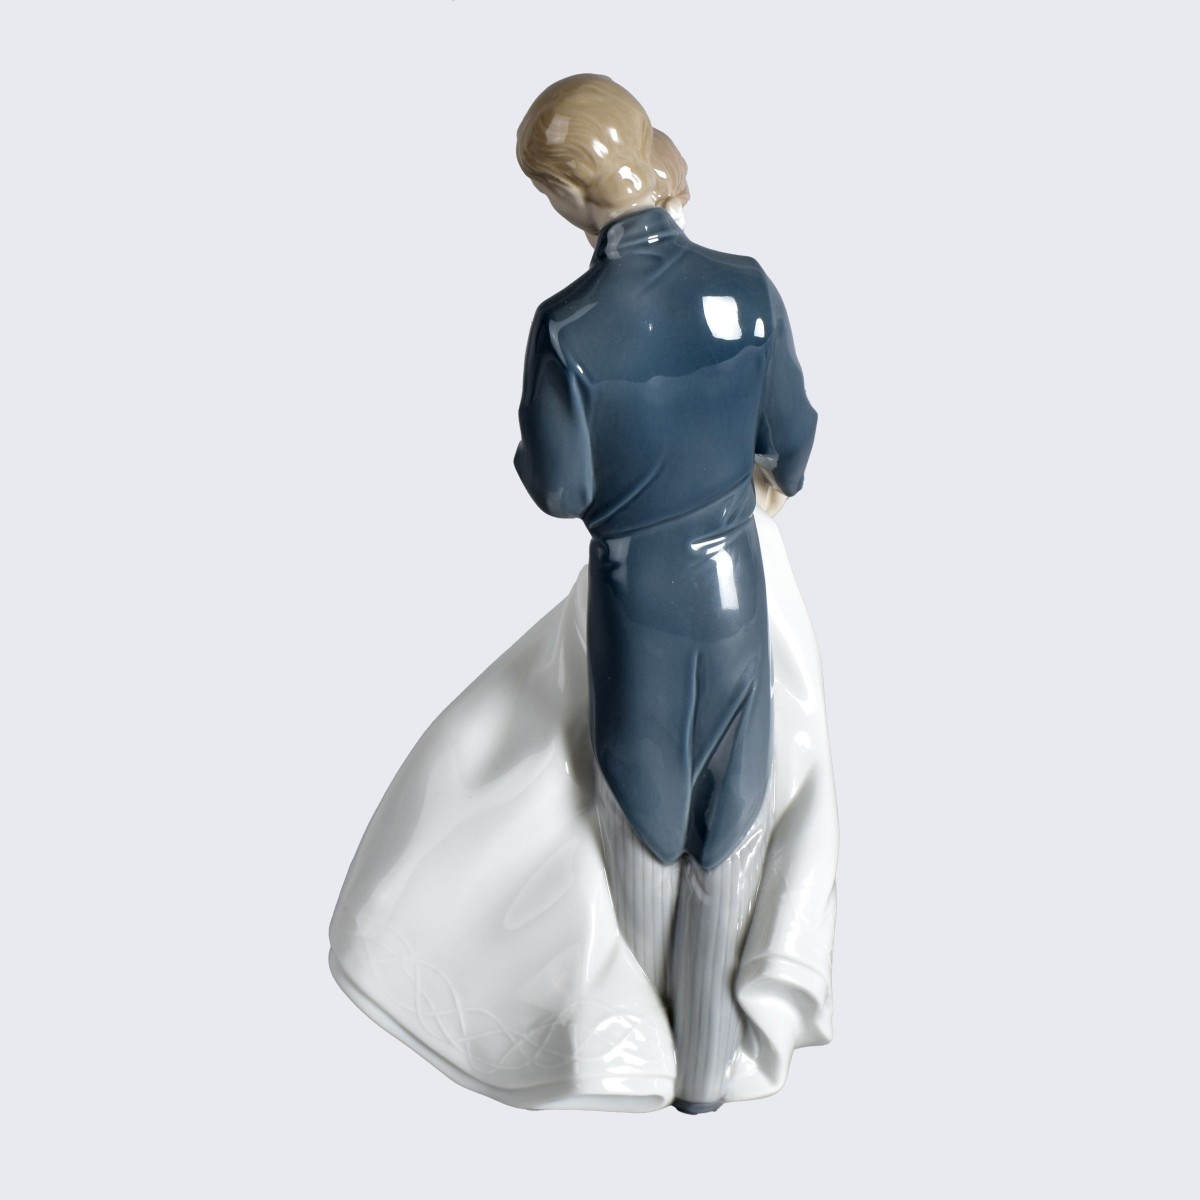 Lladro Porcelain Figurine